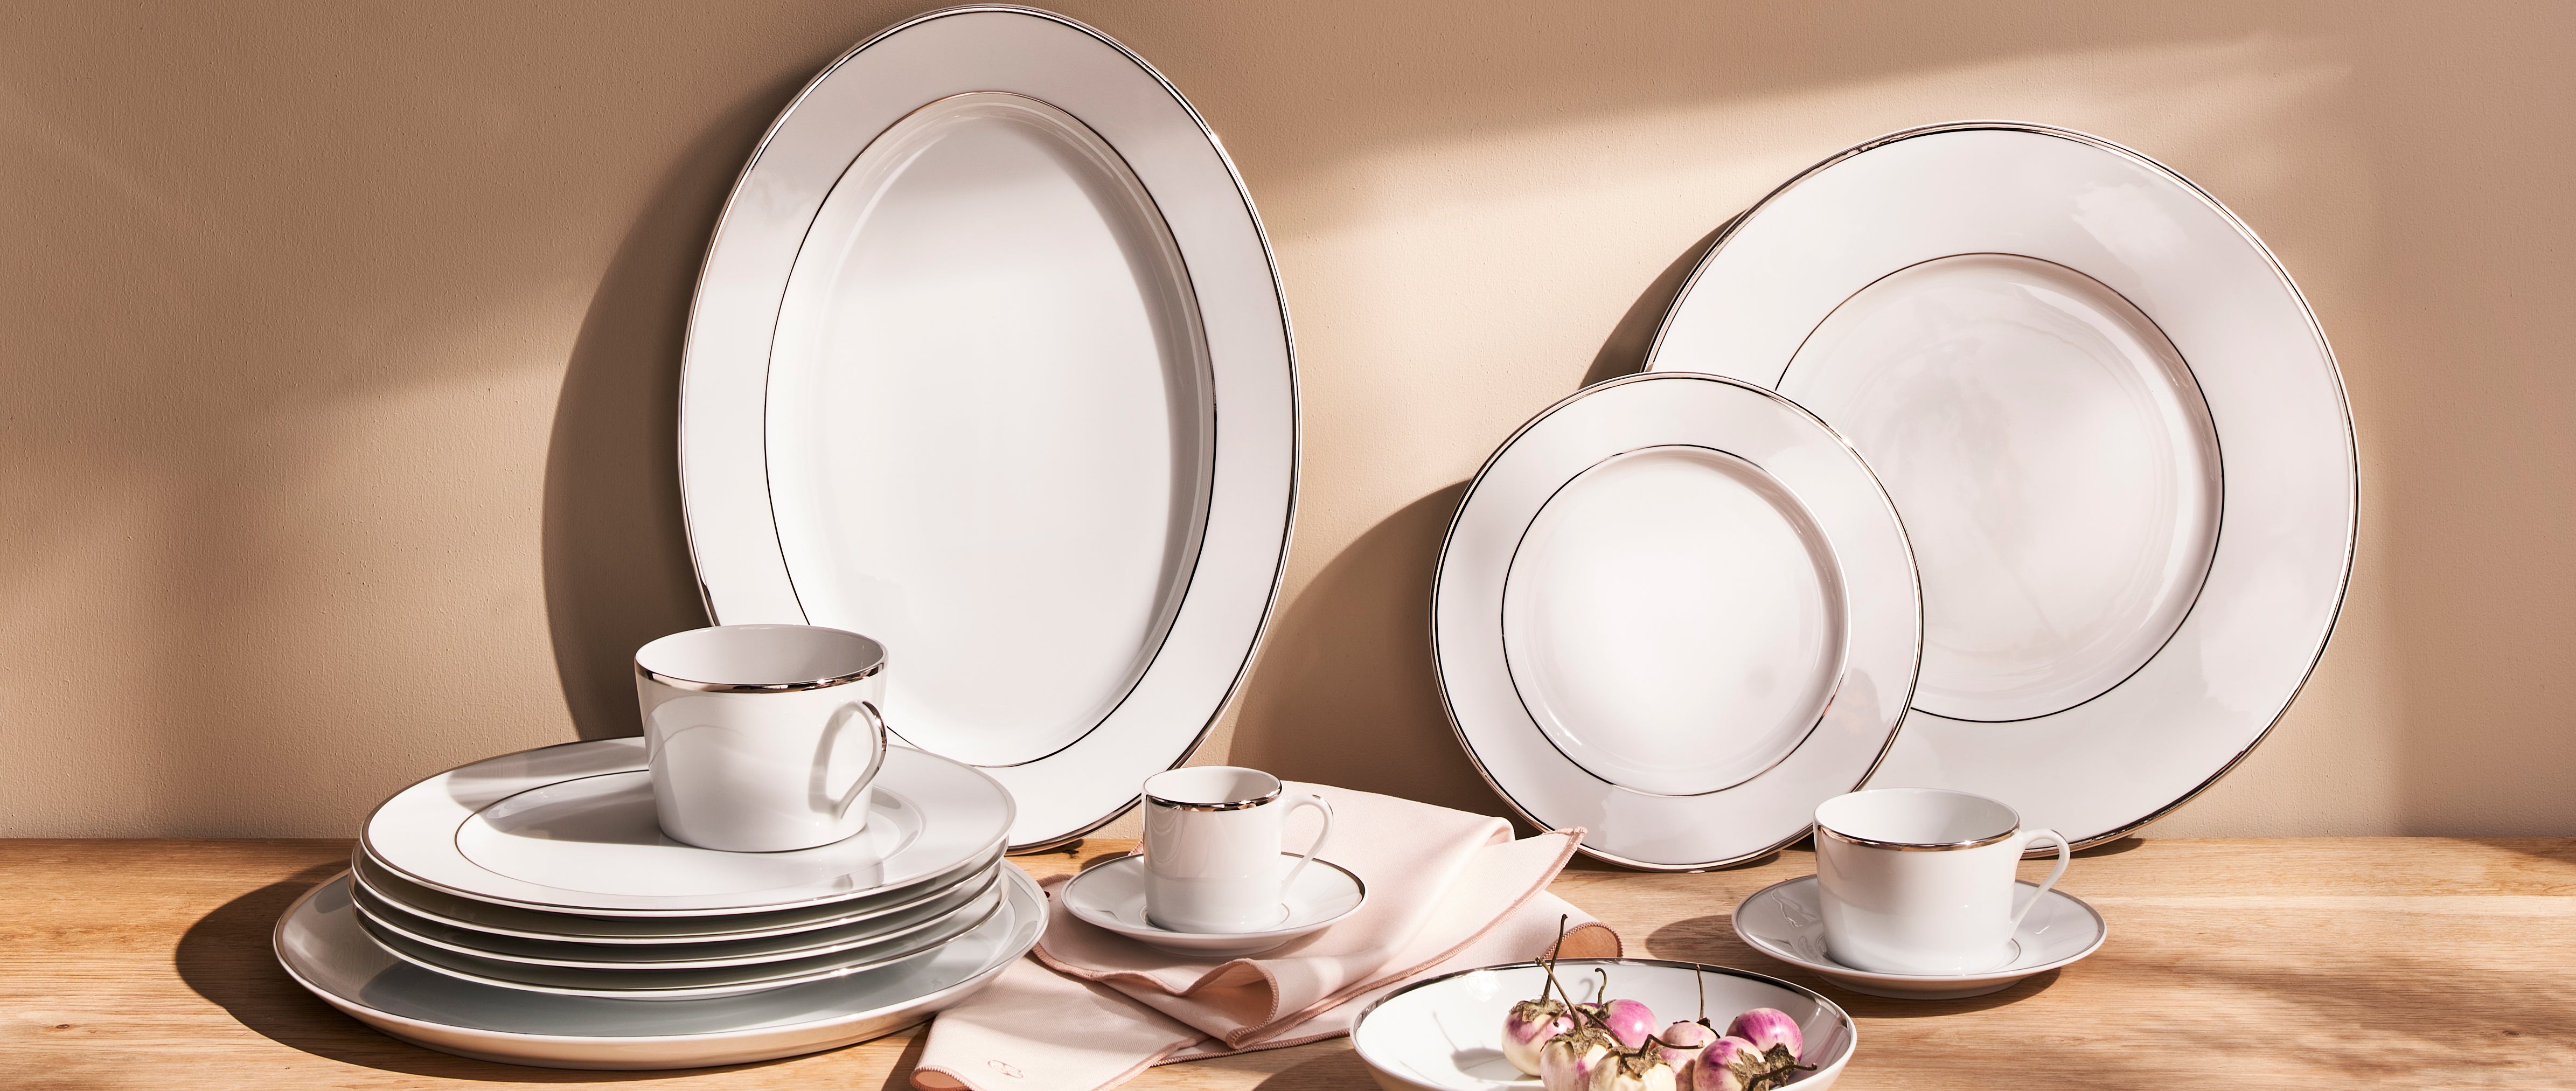 White Dessert Plates/Salad Plate, melamine plates, Small Dinner Plates for  Snacks, Side Dishes, Round Serving Plates (12)